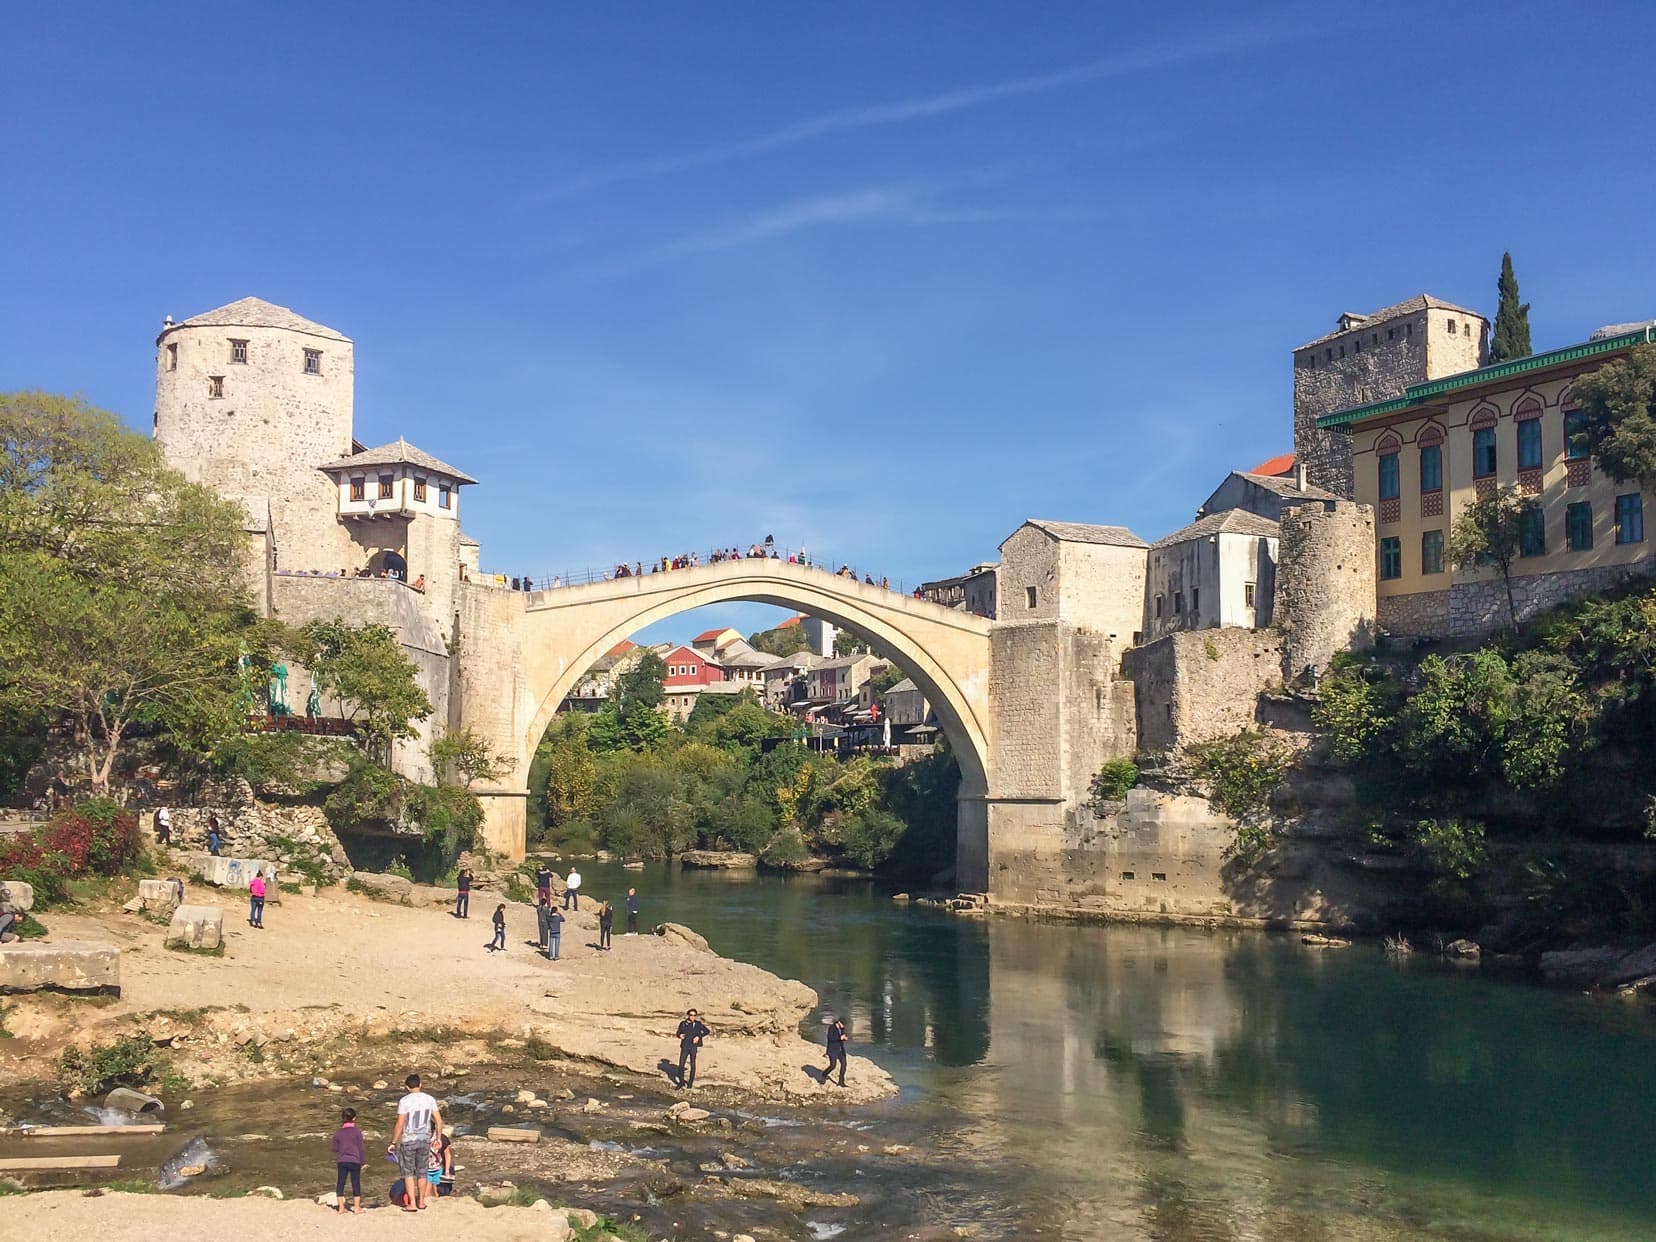 Mostar Bridge